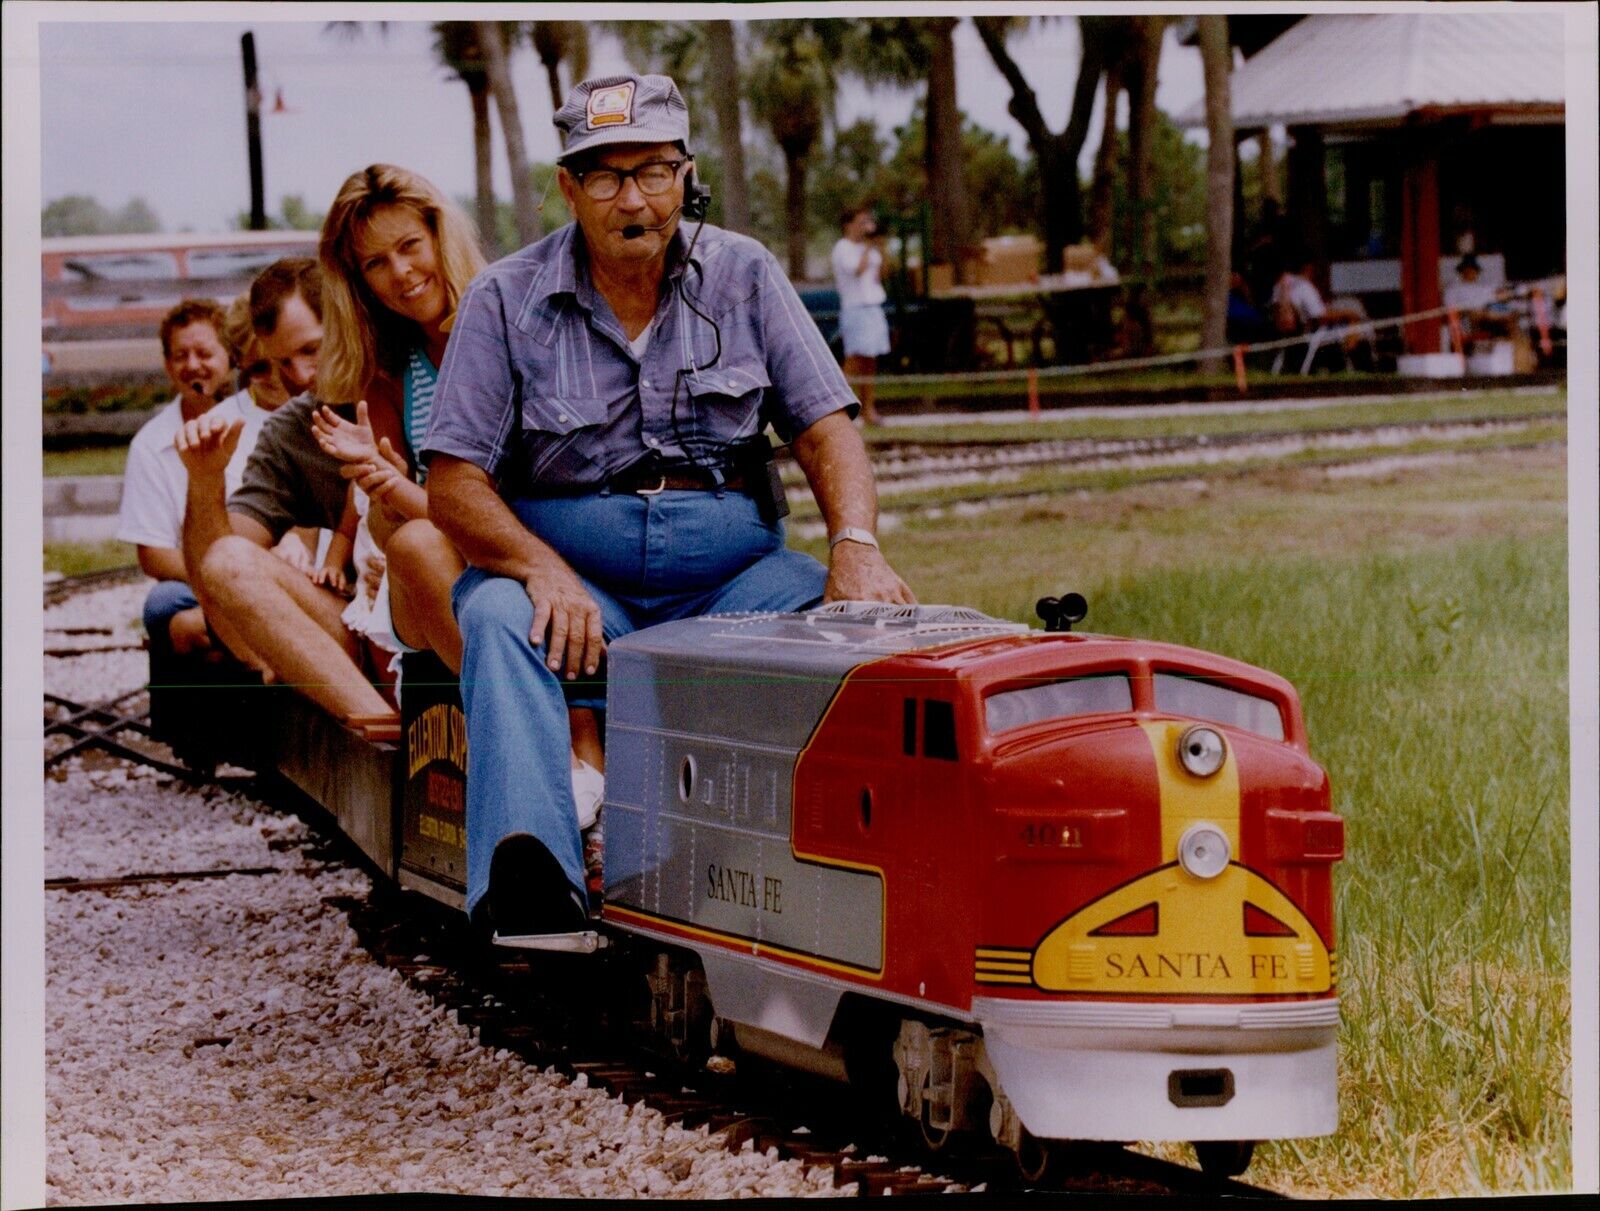 LG870 Original Color Photo SANTA FE Miniature Train Conductor Family Fun Ride